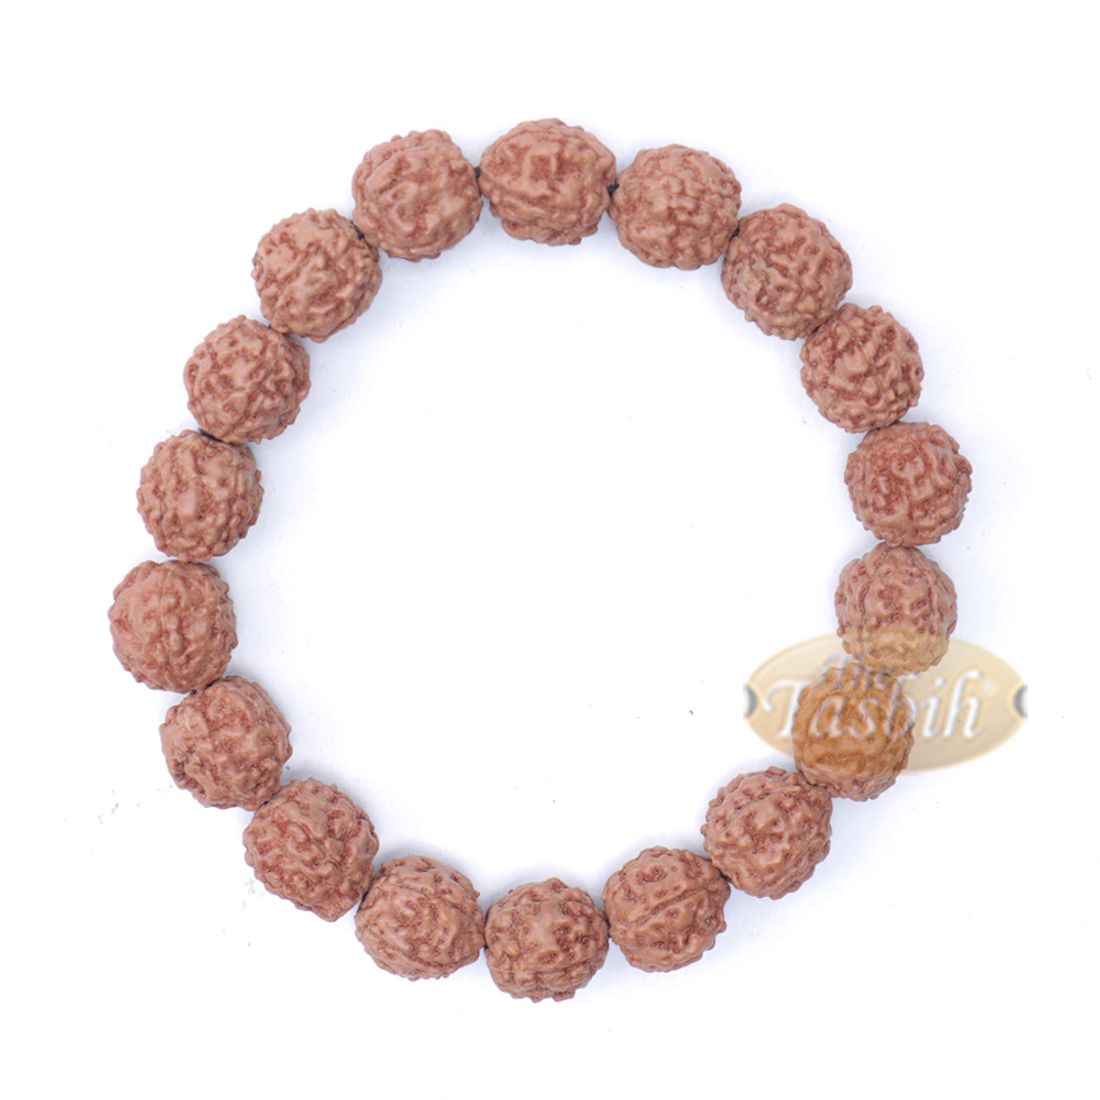 Rudraksha Beaded Bracelet – 10mm Jenitri Seed Healing Prayer Beads with 19 Beads on Elastic Cord